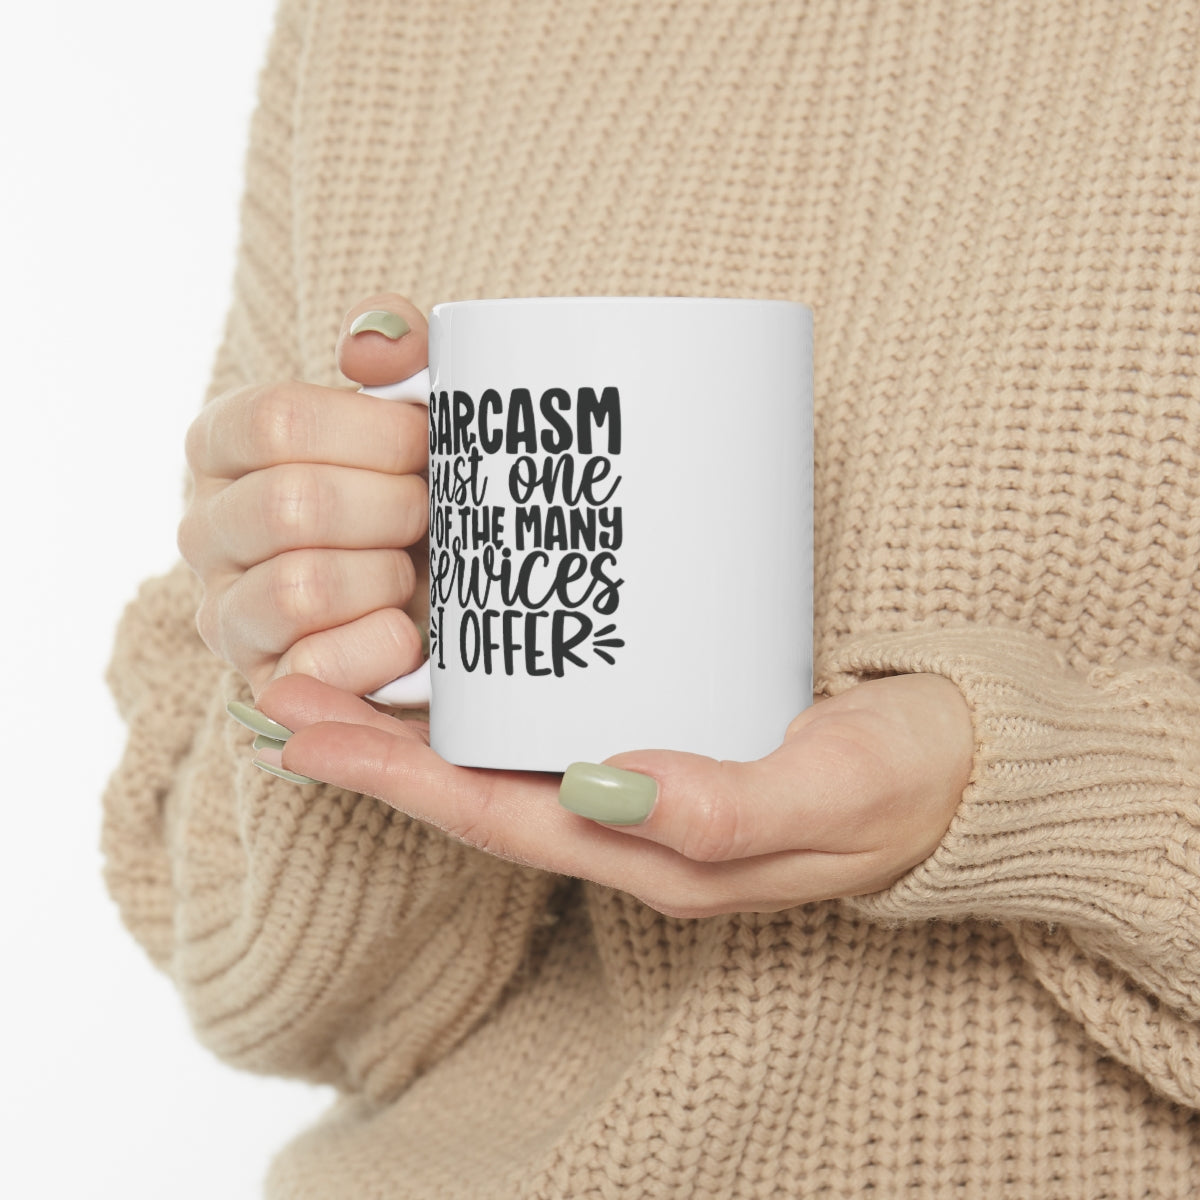 Sarcasm Service Ceramic Mug